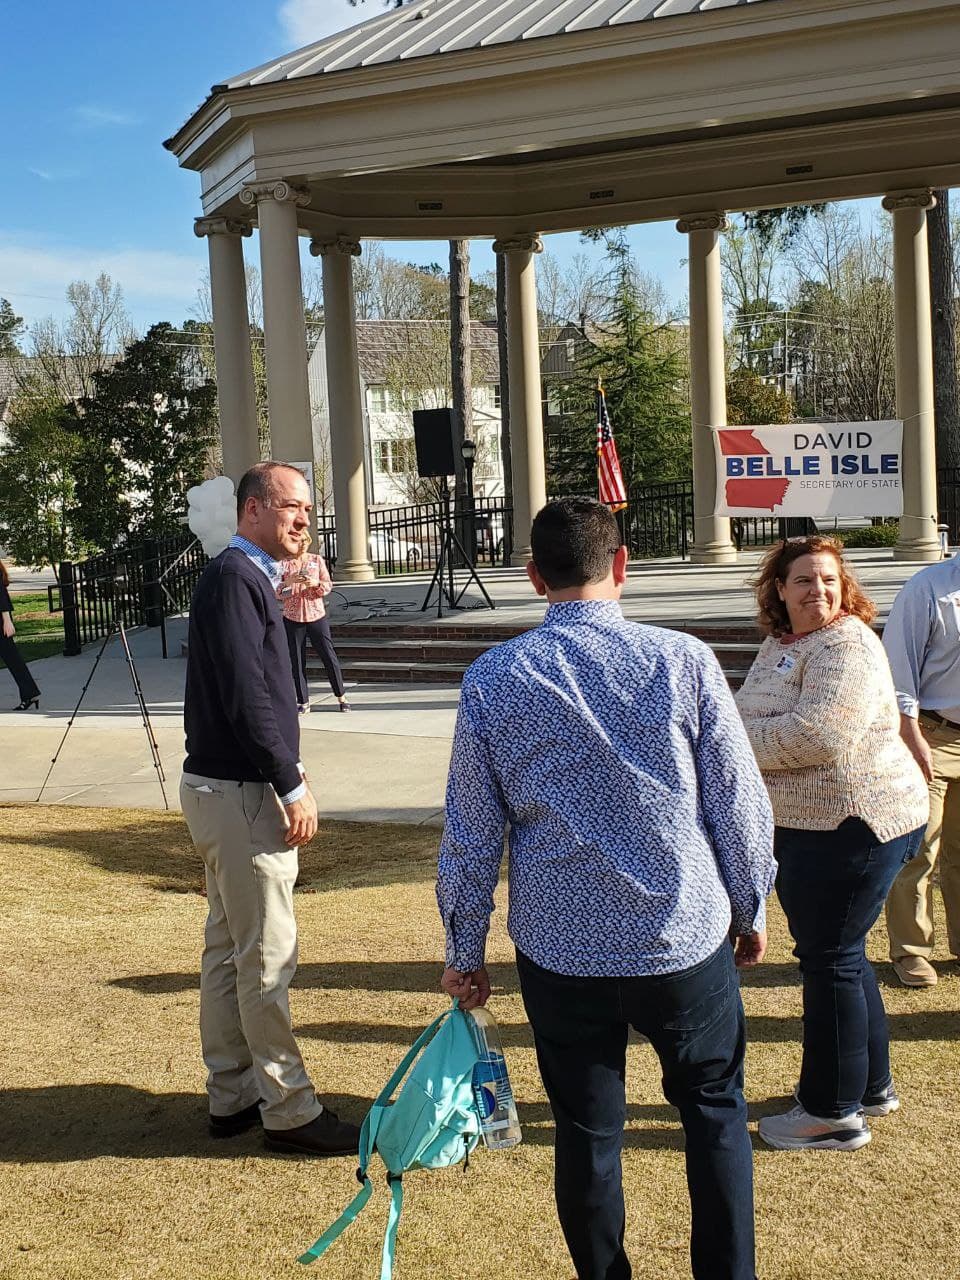 Alpharetta Mayor David Belle Isle Launches Campaign For GA SoS To Replace Anti-Trump Raffensperger